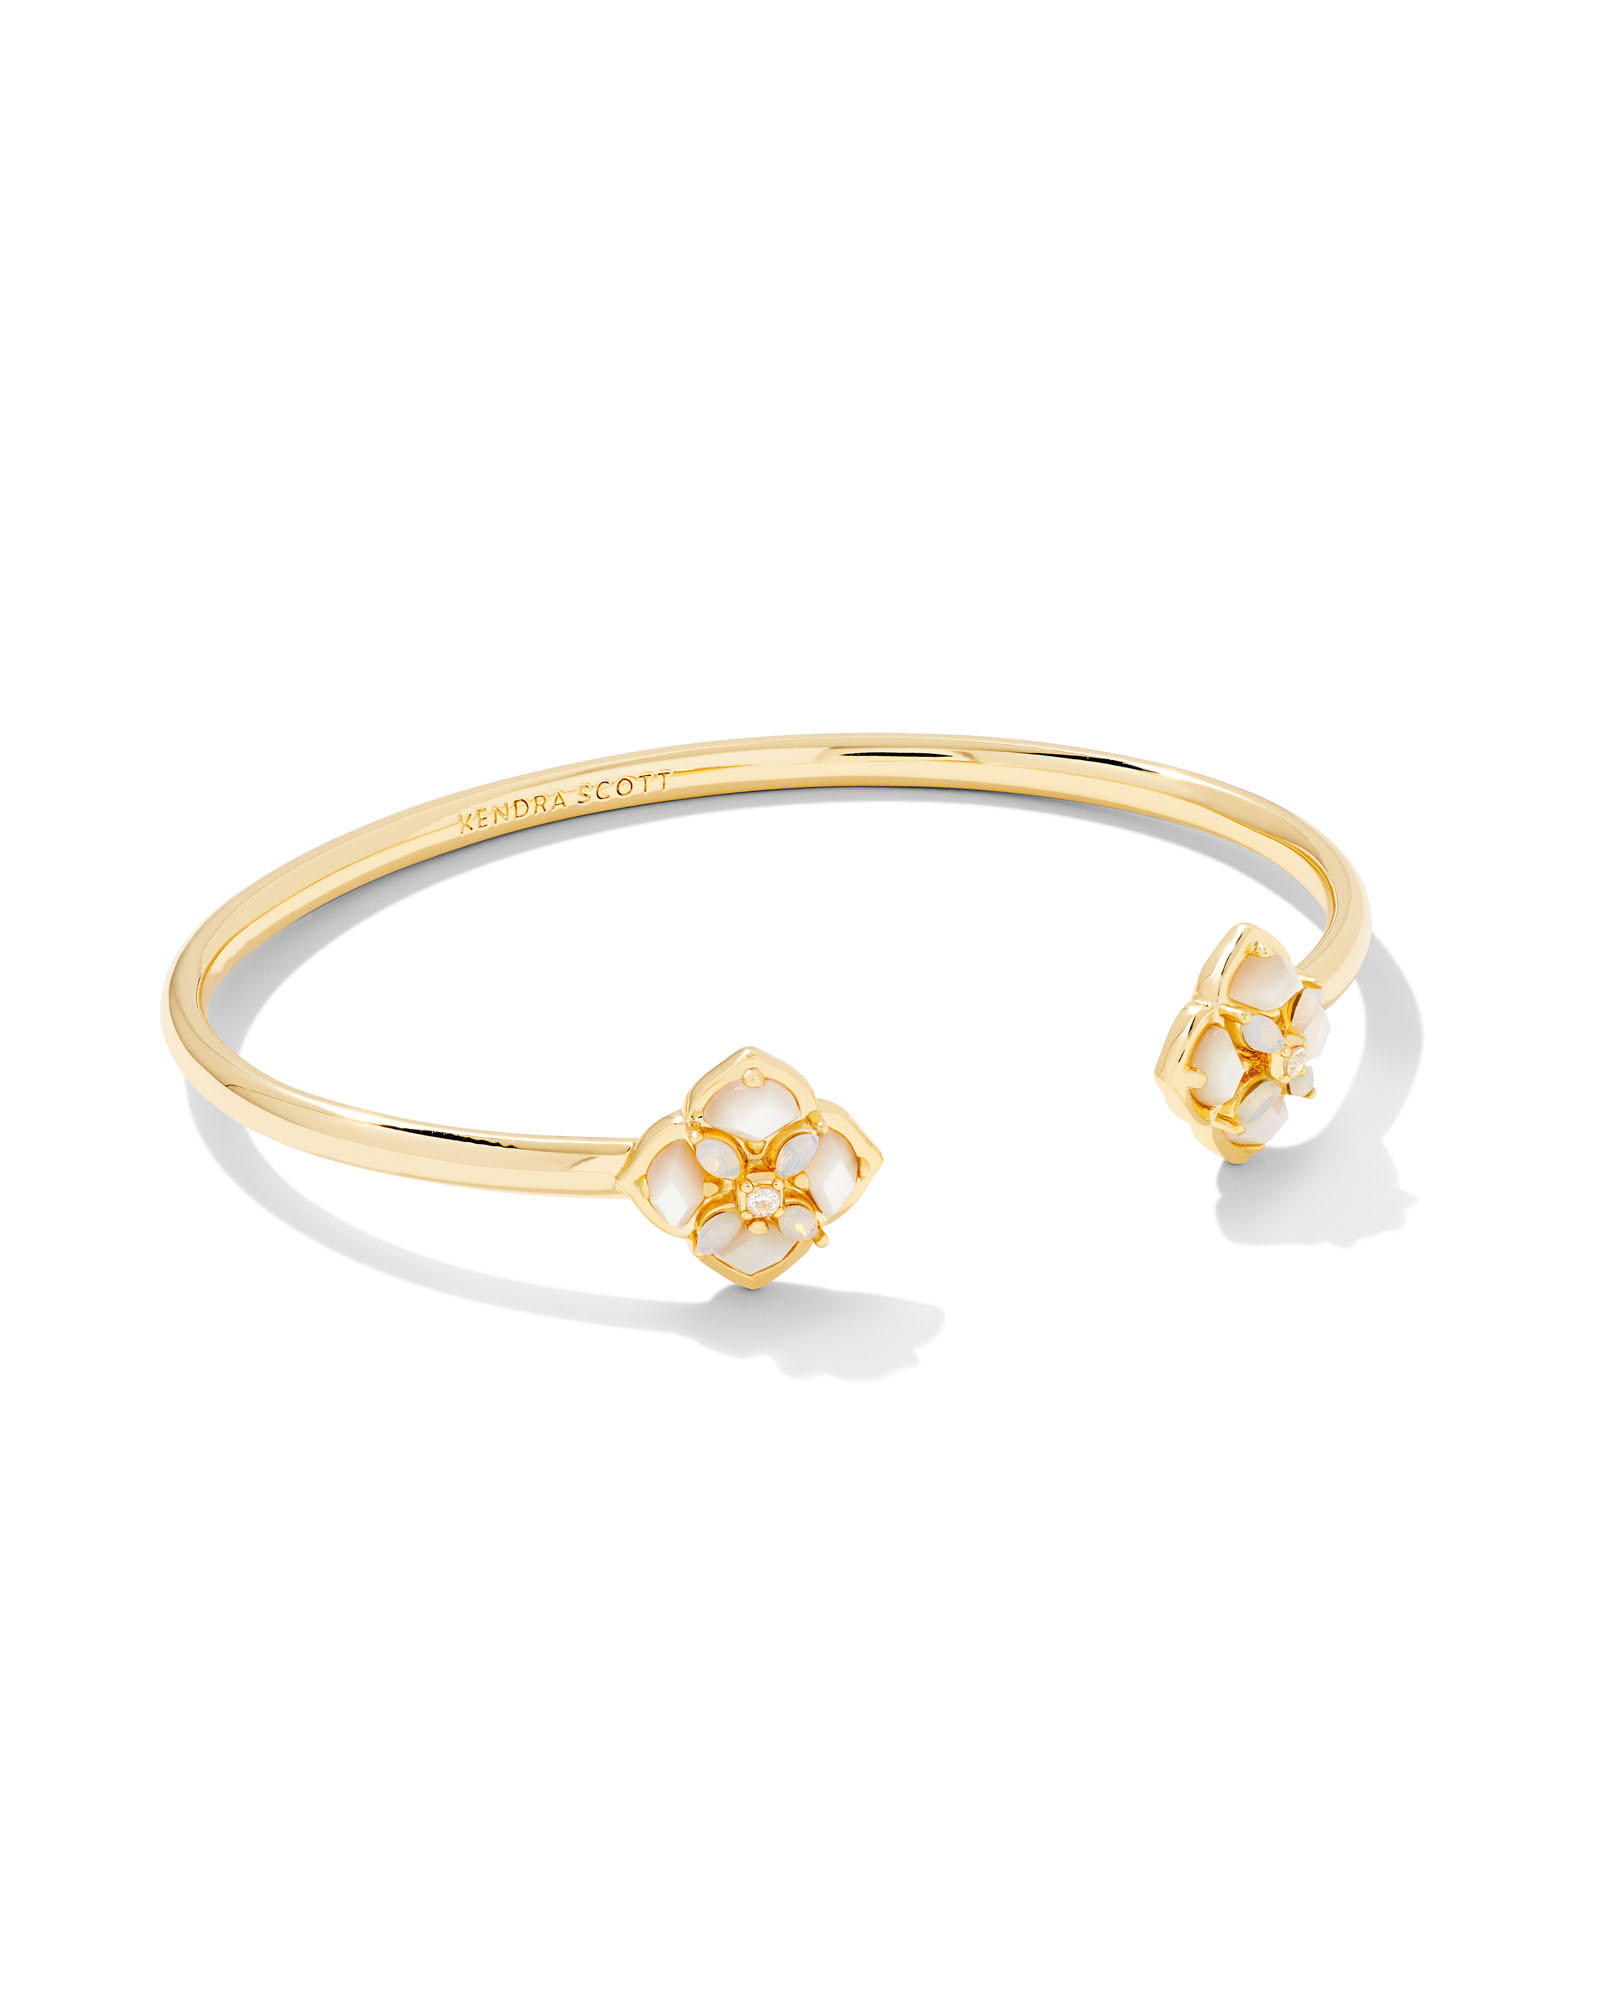 Birthstone & Little Luxe Letter Bracelet (Gold)